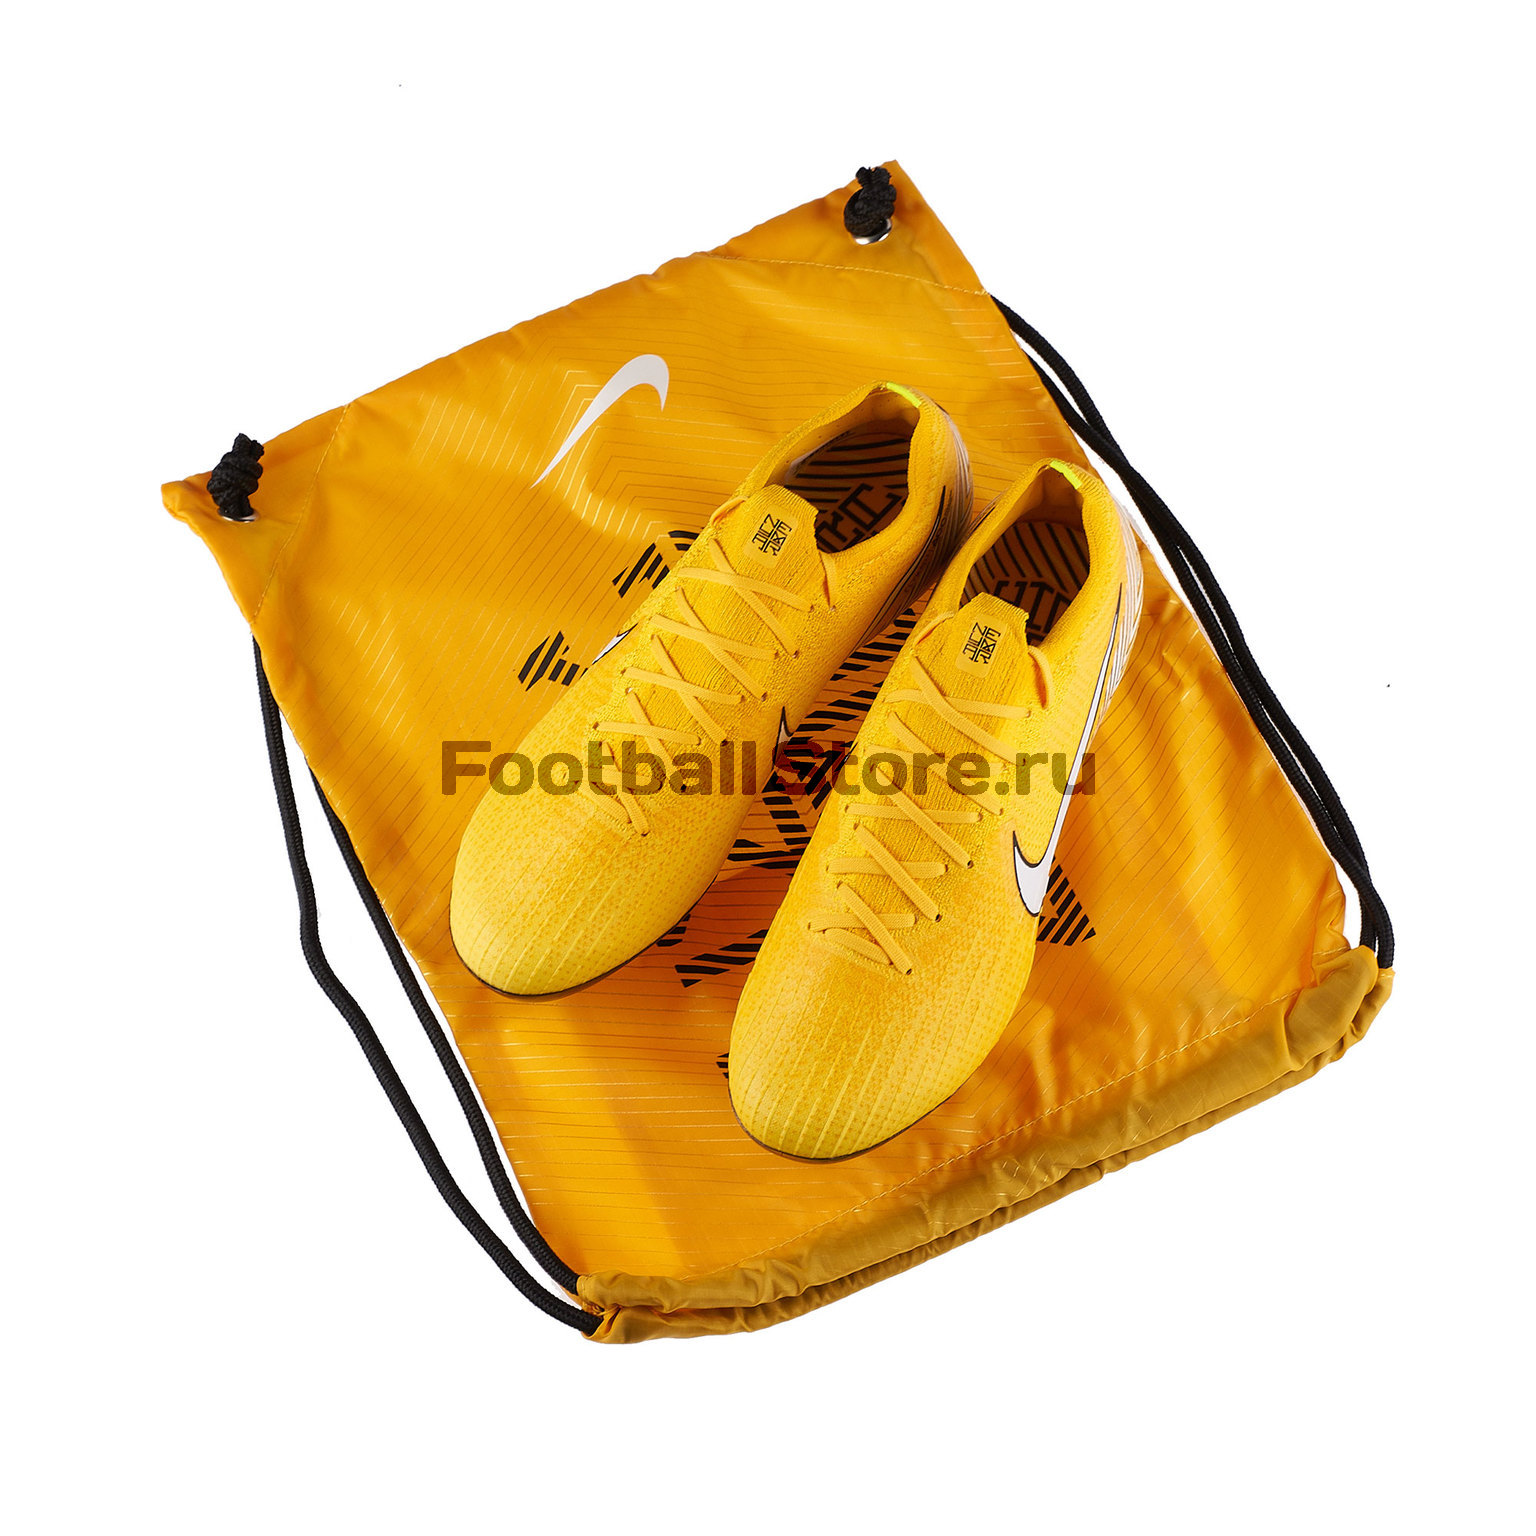 Бутсы Nike Vapor 12 Elite Neymar AG-Pro AO3128-710